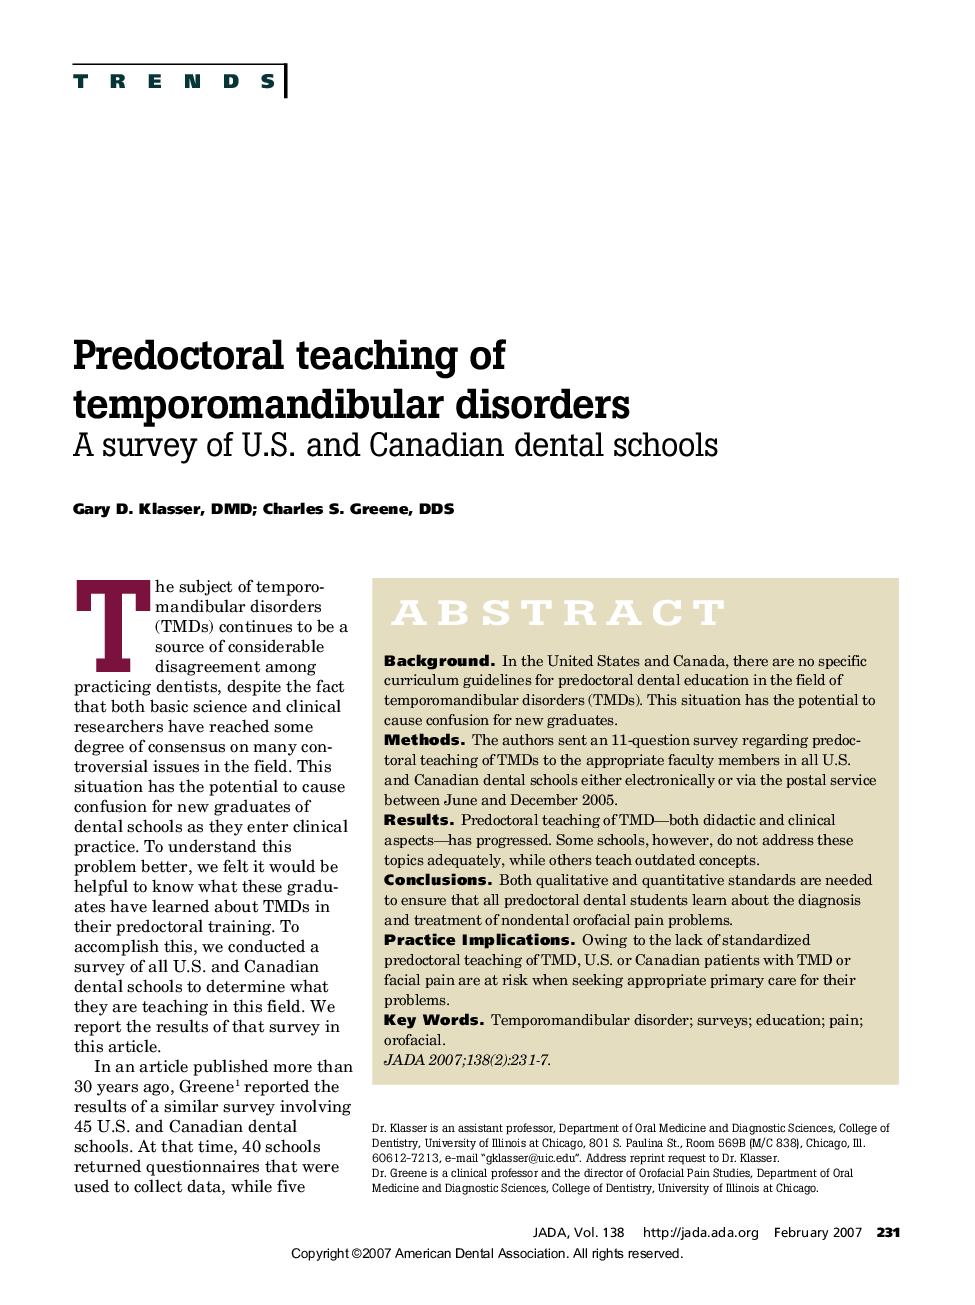 Predoctoral teaching of temporomandibular disorders : A survey of U.S. and Canadian dental schools